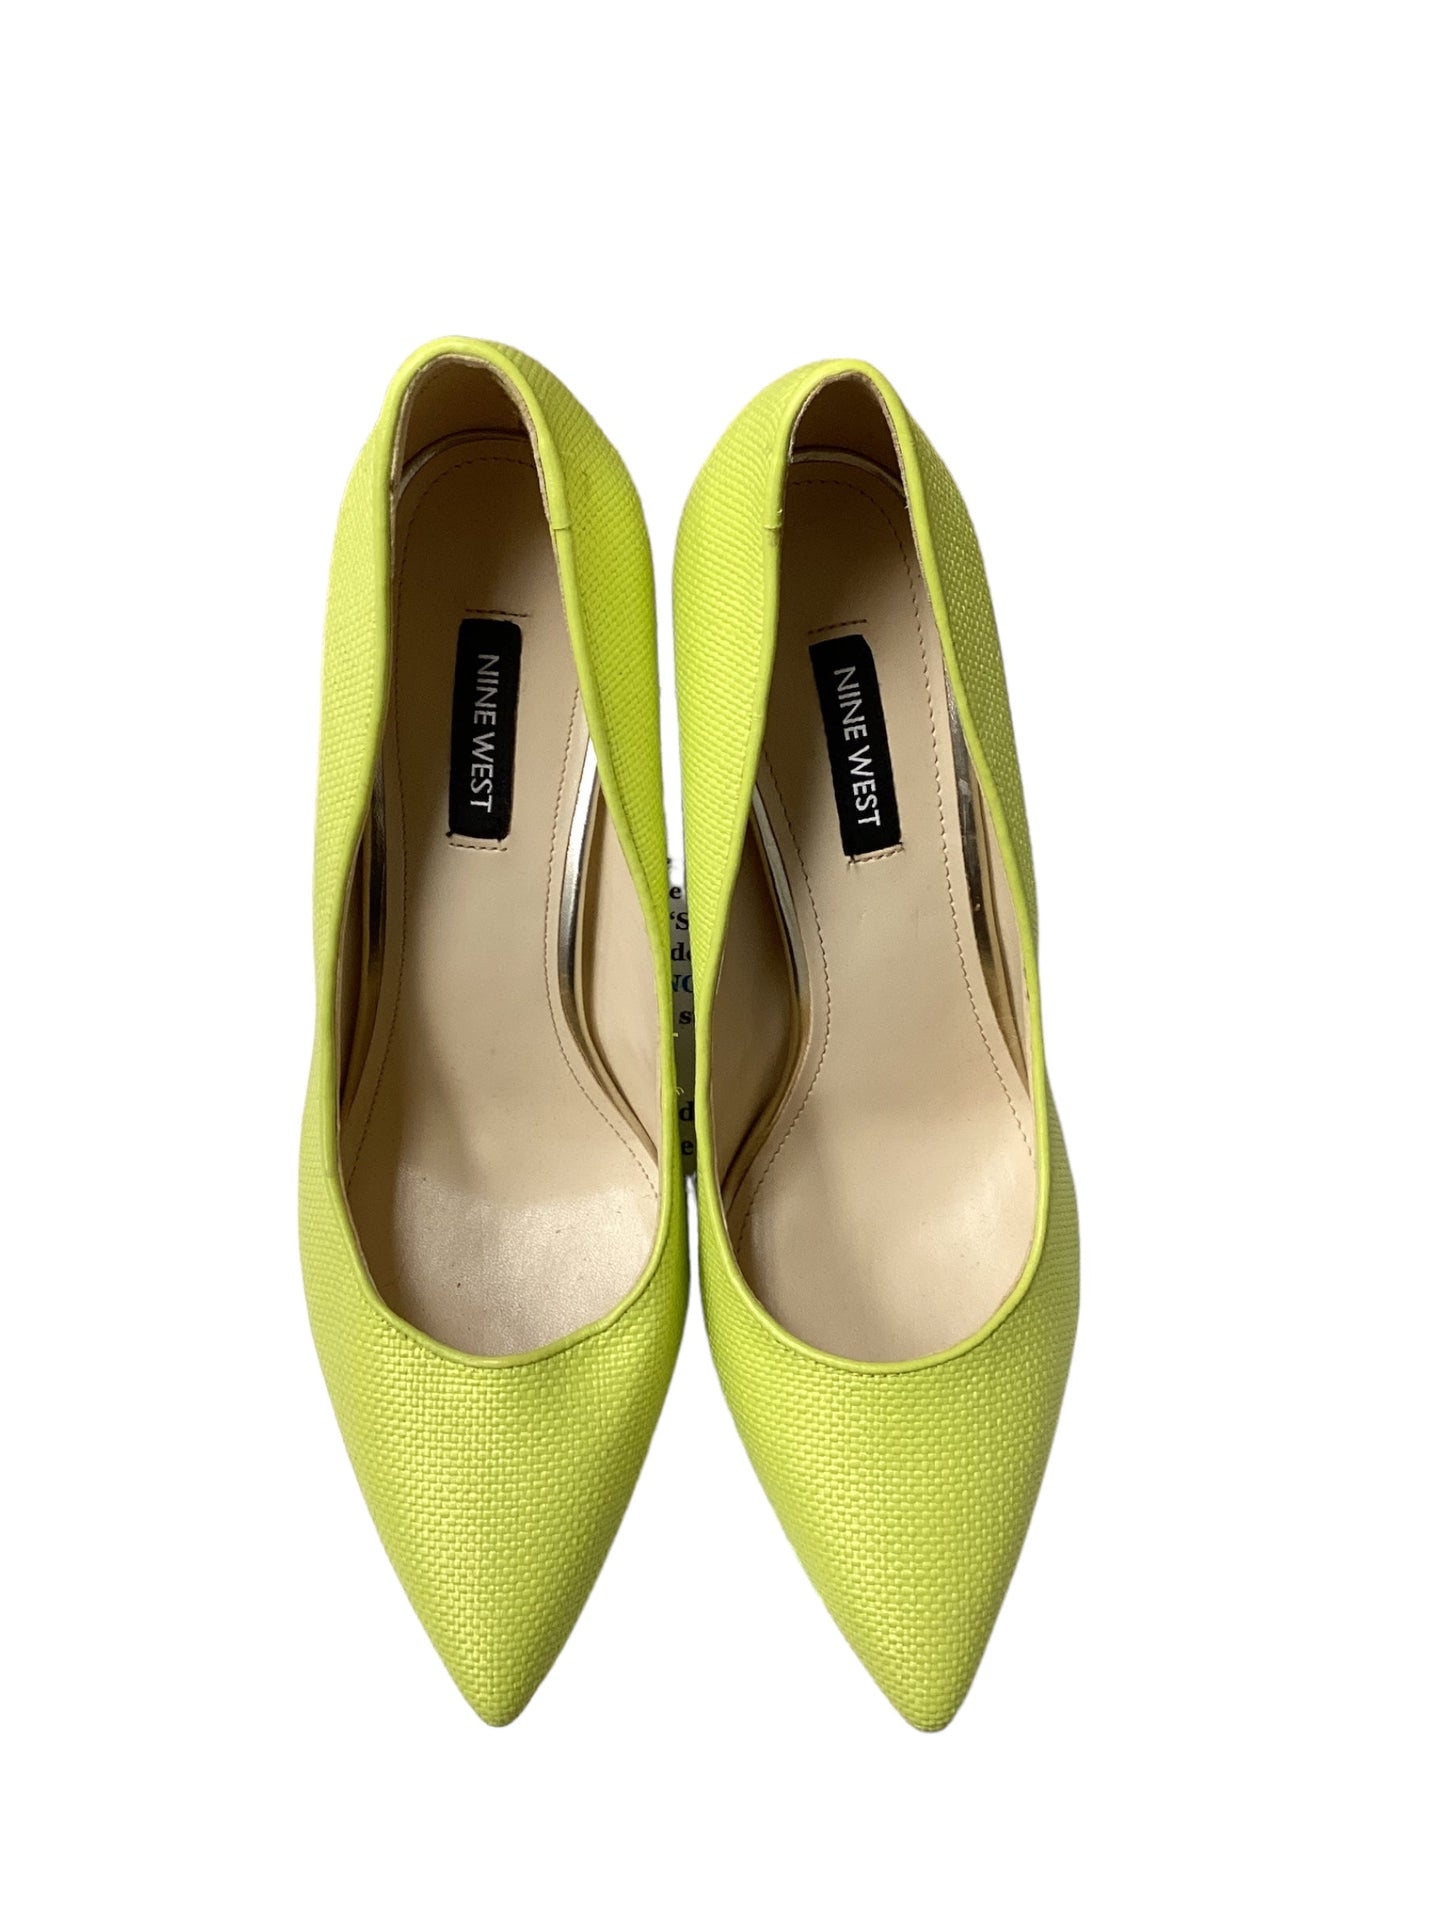 Yellow Shoes Heels Stiletto Nine West, Size 8